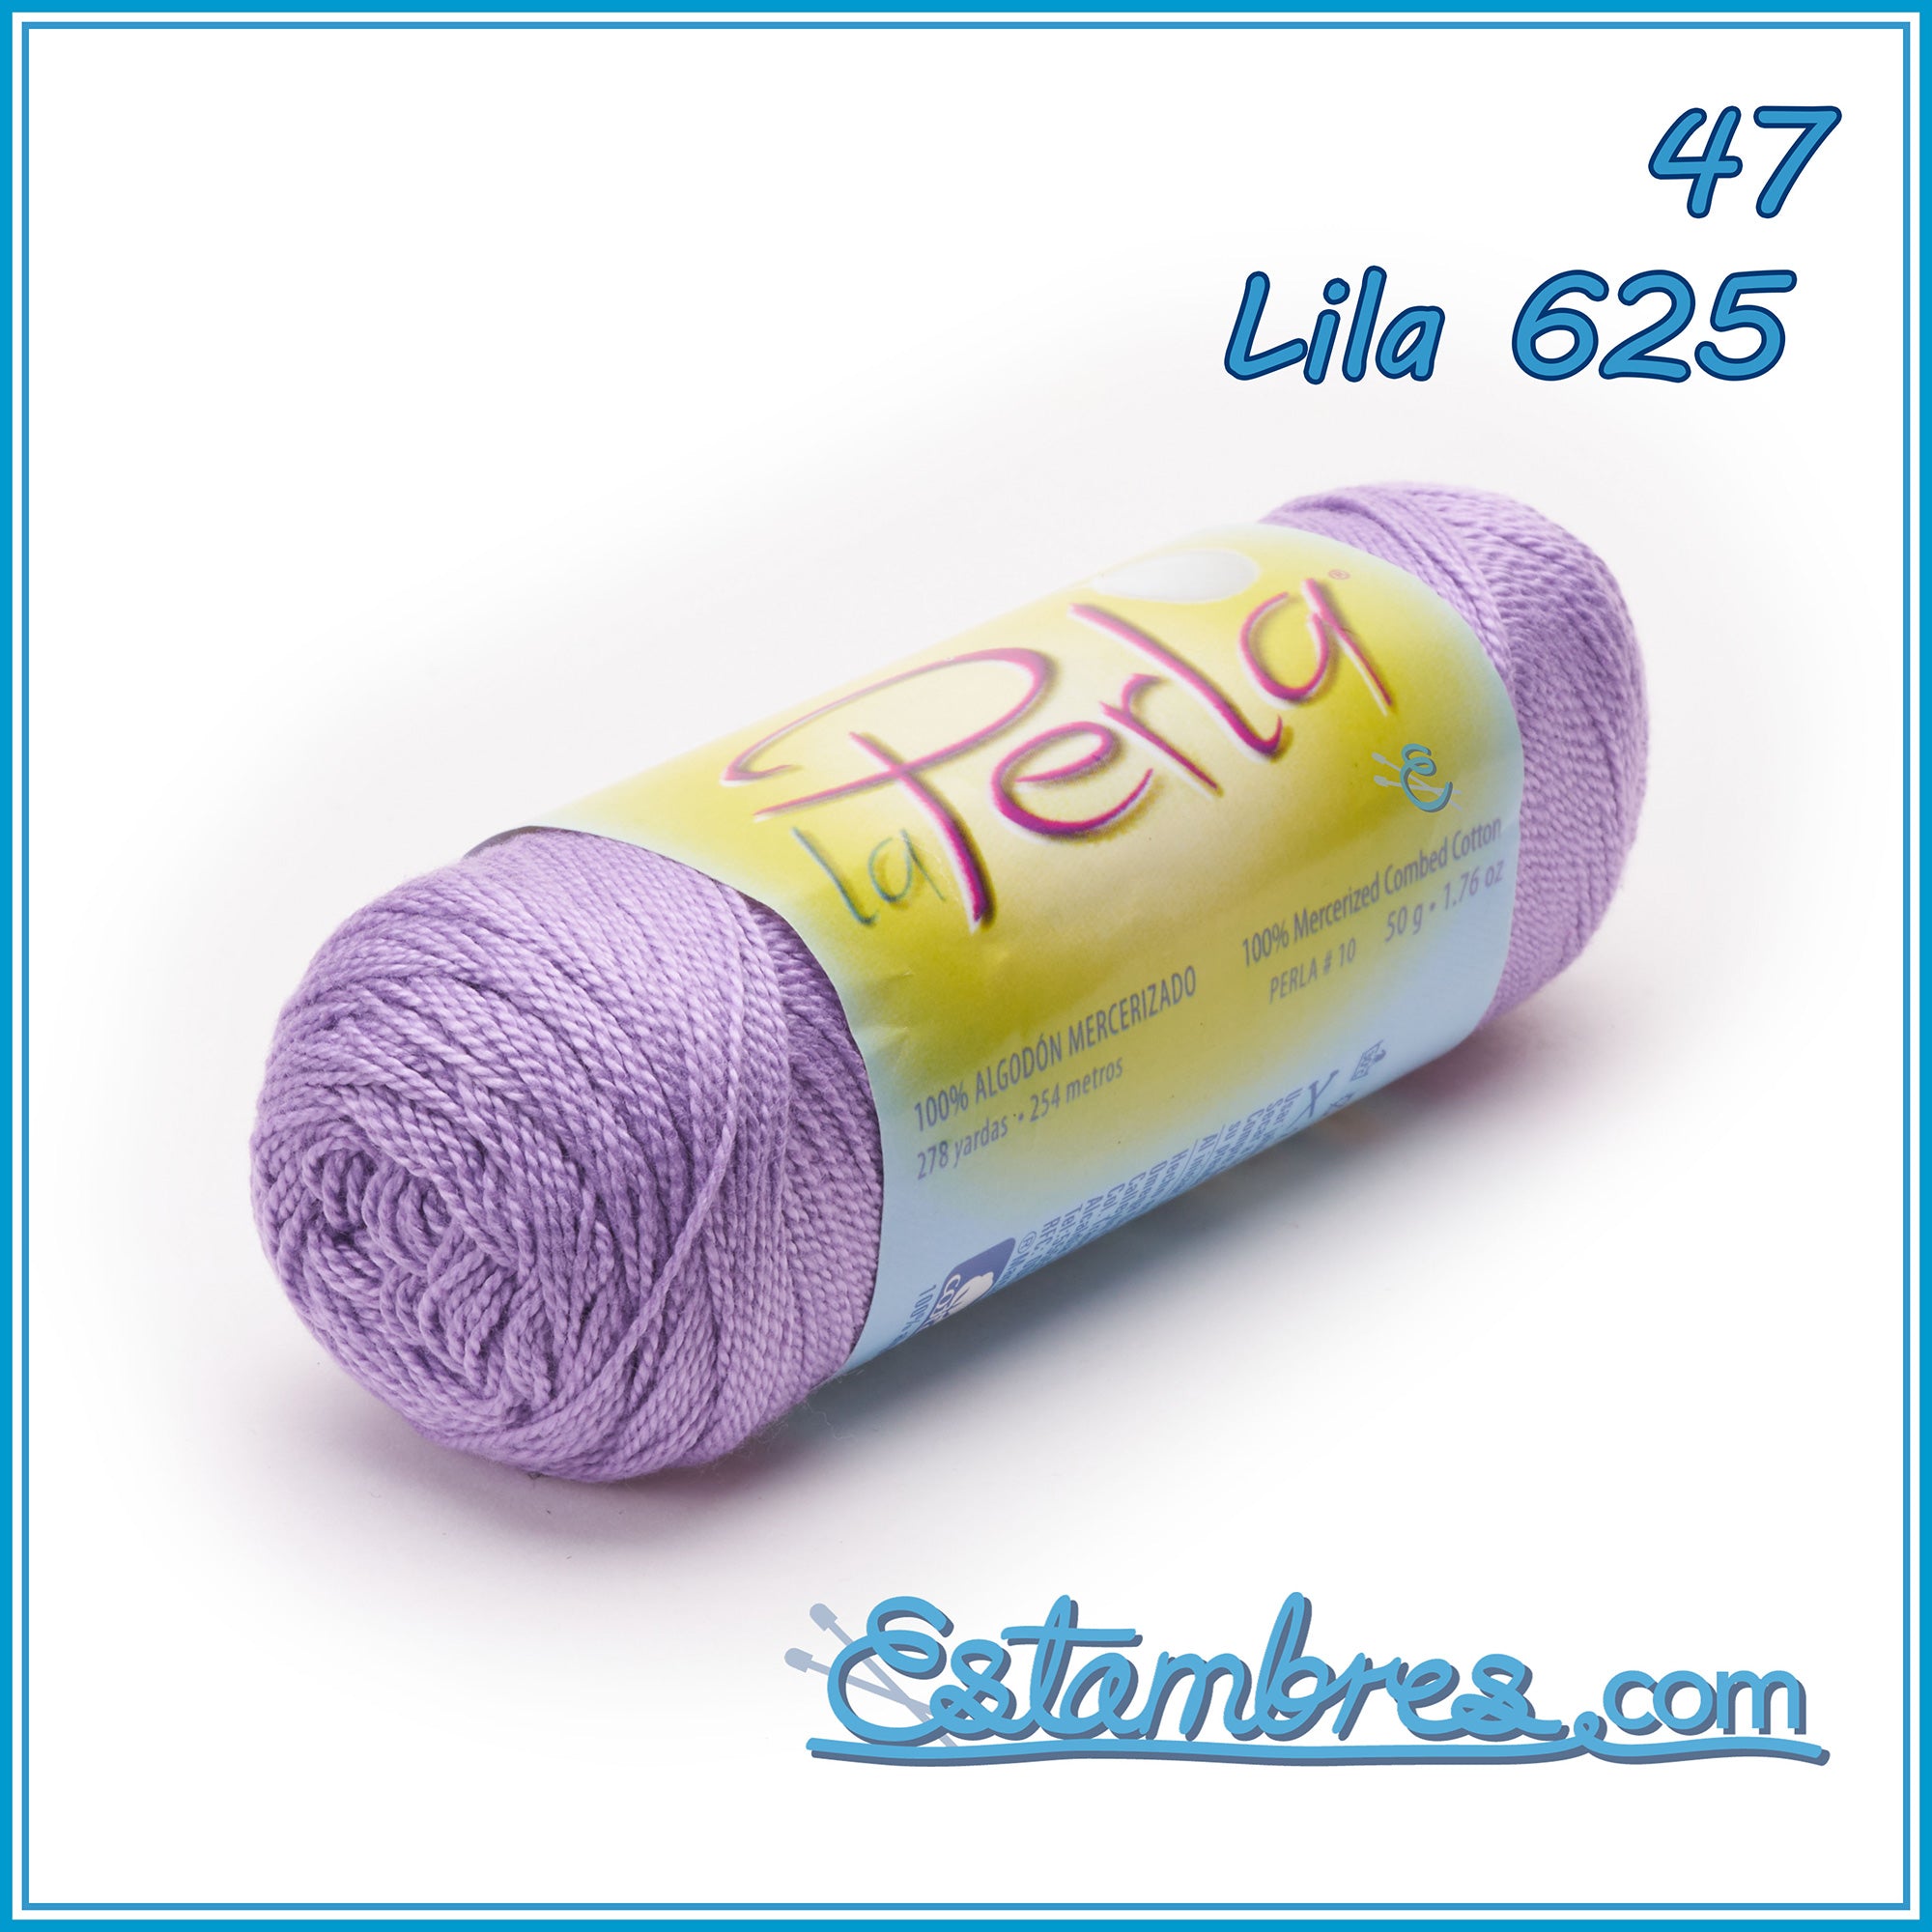 La Perla [50grs] - Omega  0 - Lace - 100% Mercerized Cotton Yarn